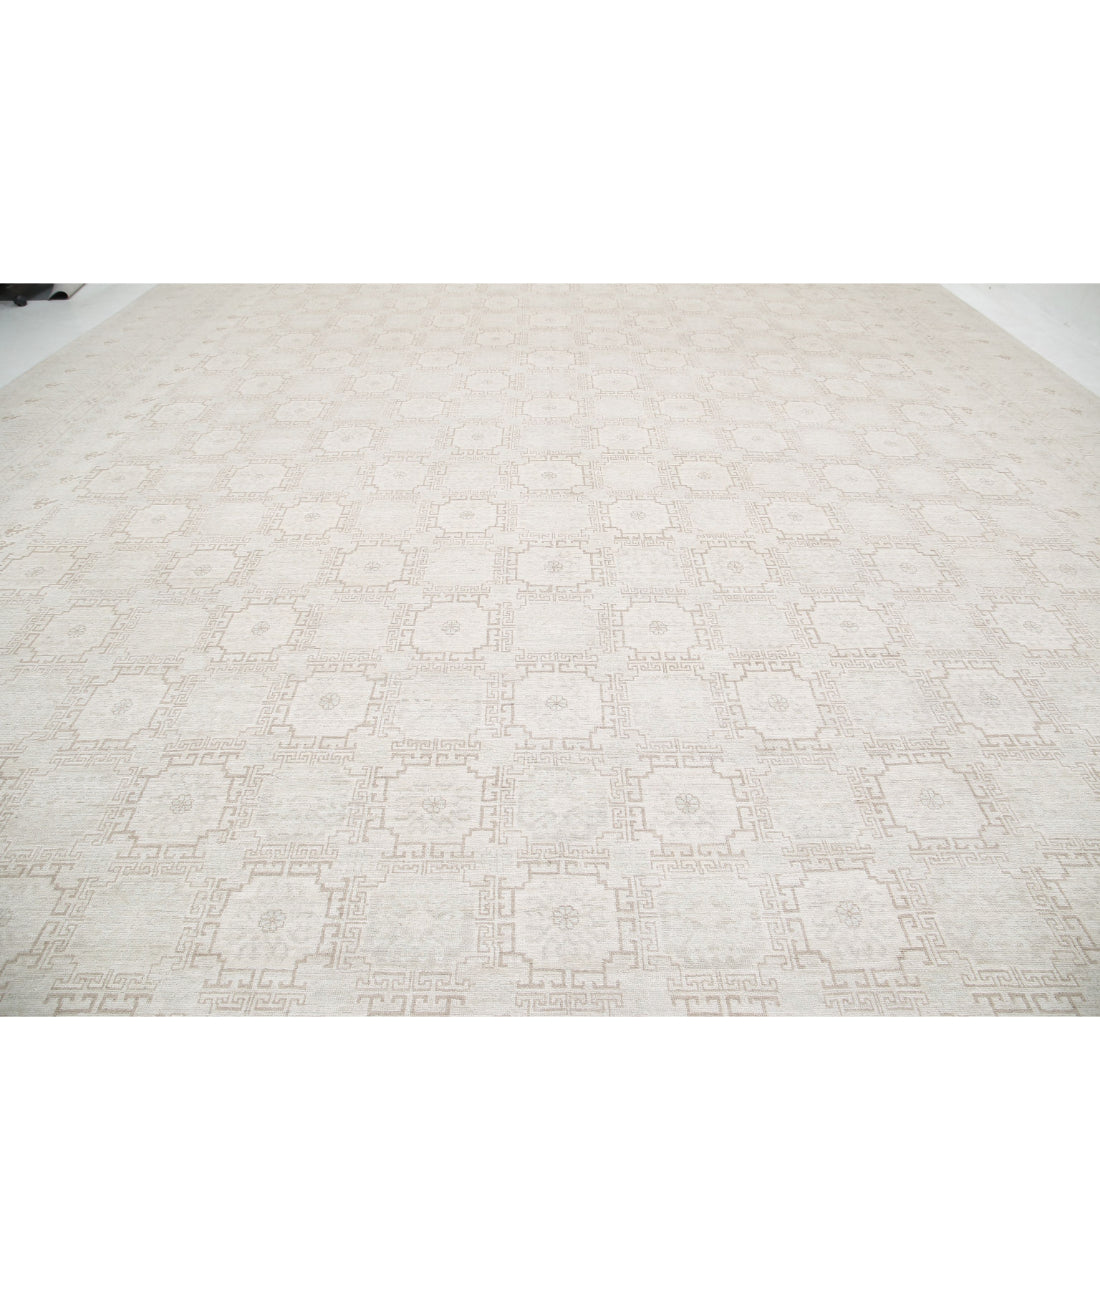 hand-knotted-khotan-wool-rug-5013434-4.jpg